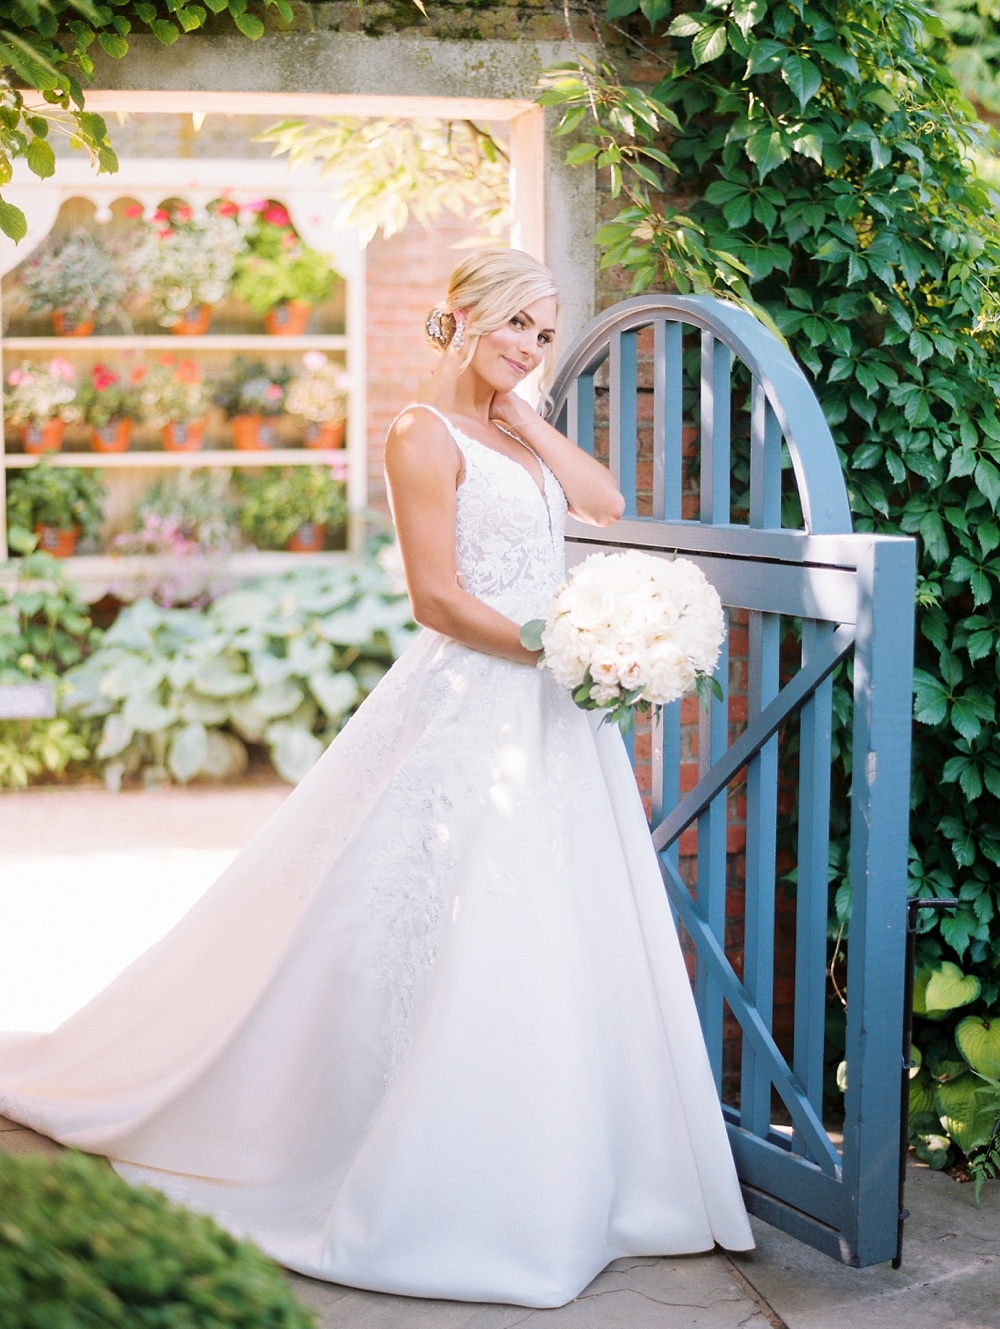 Kristin-La-Voie-Photography-chicago-botanic-garden-wedding-photos-29